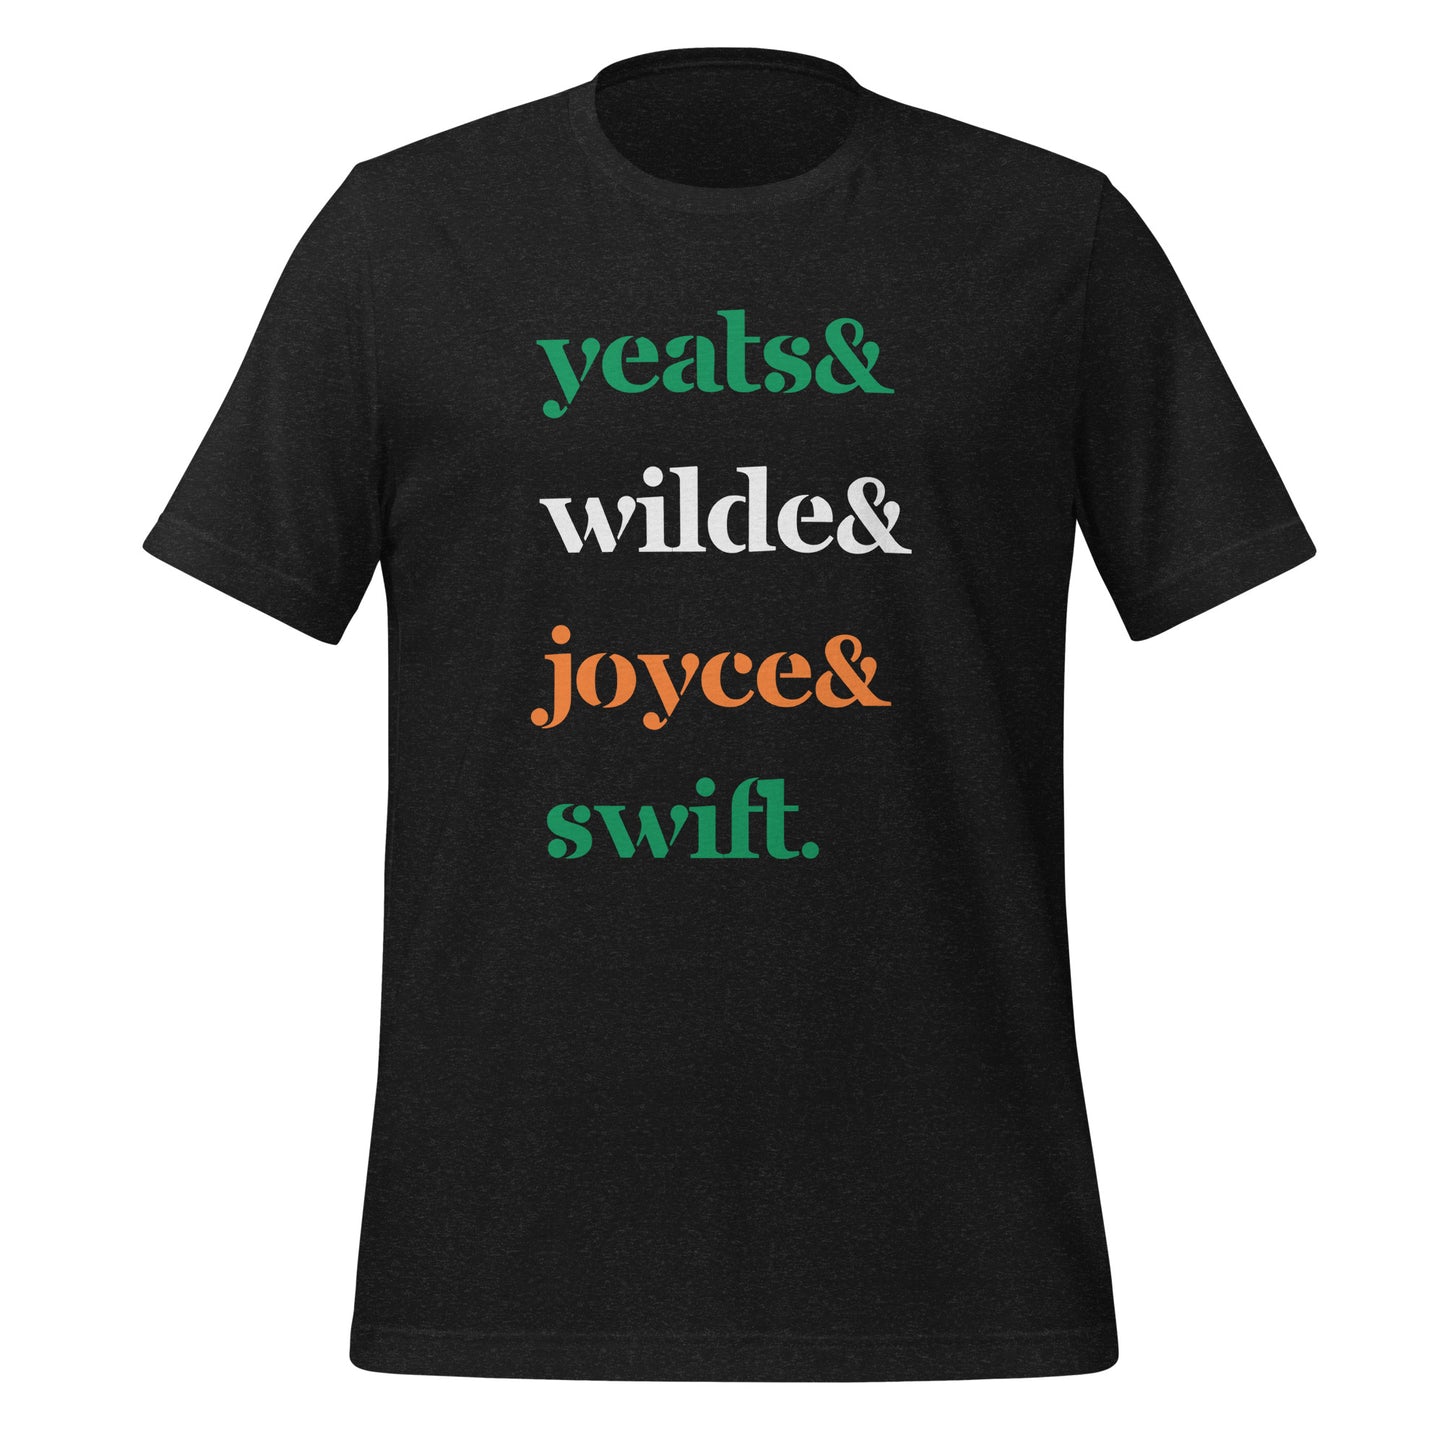 "Irish Poets" T-Shirt